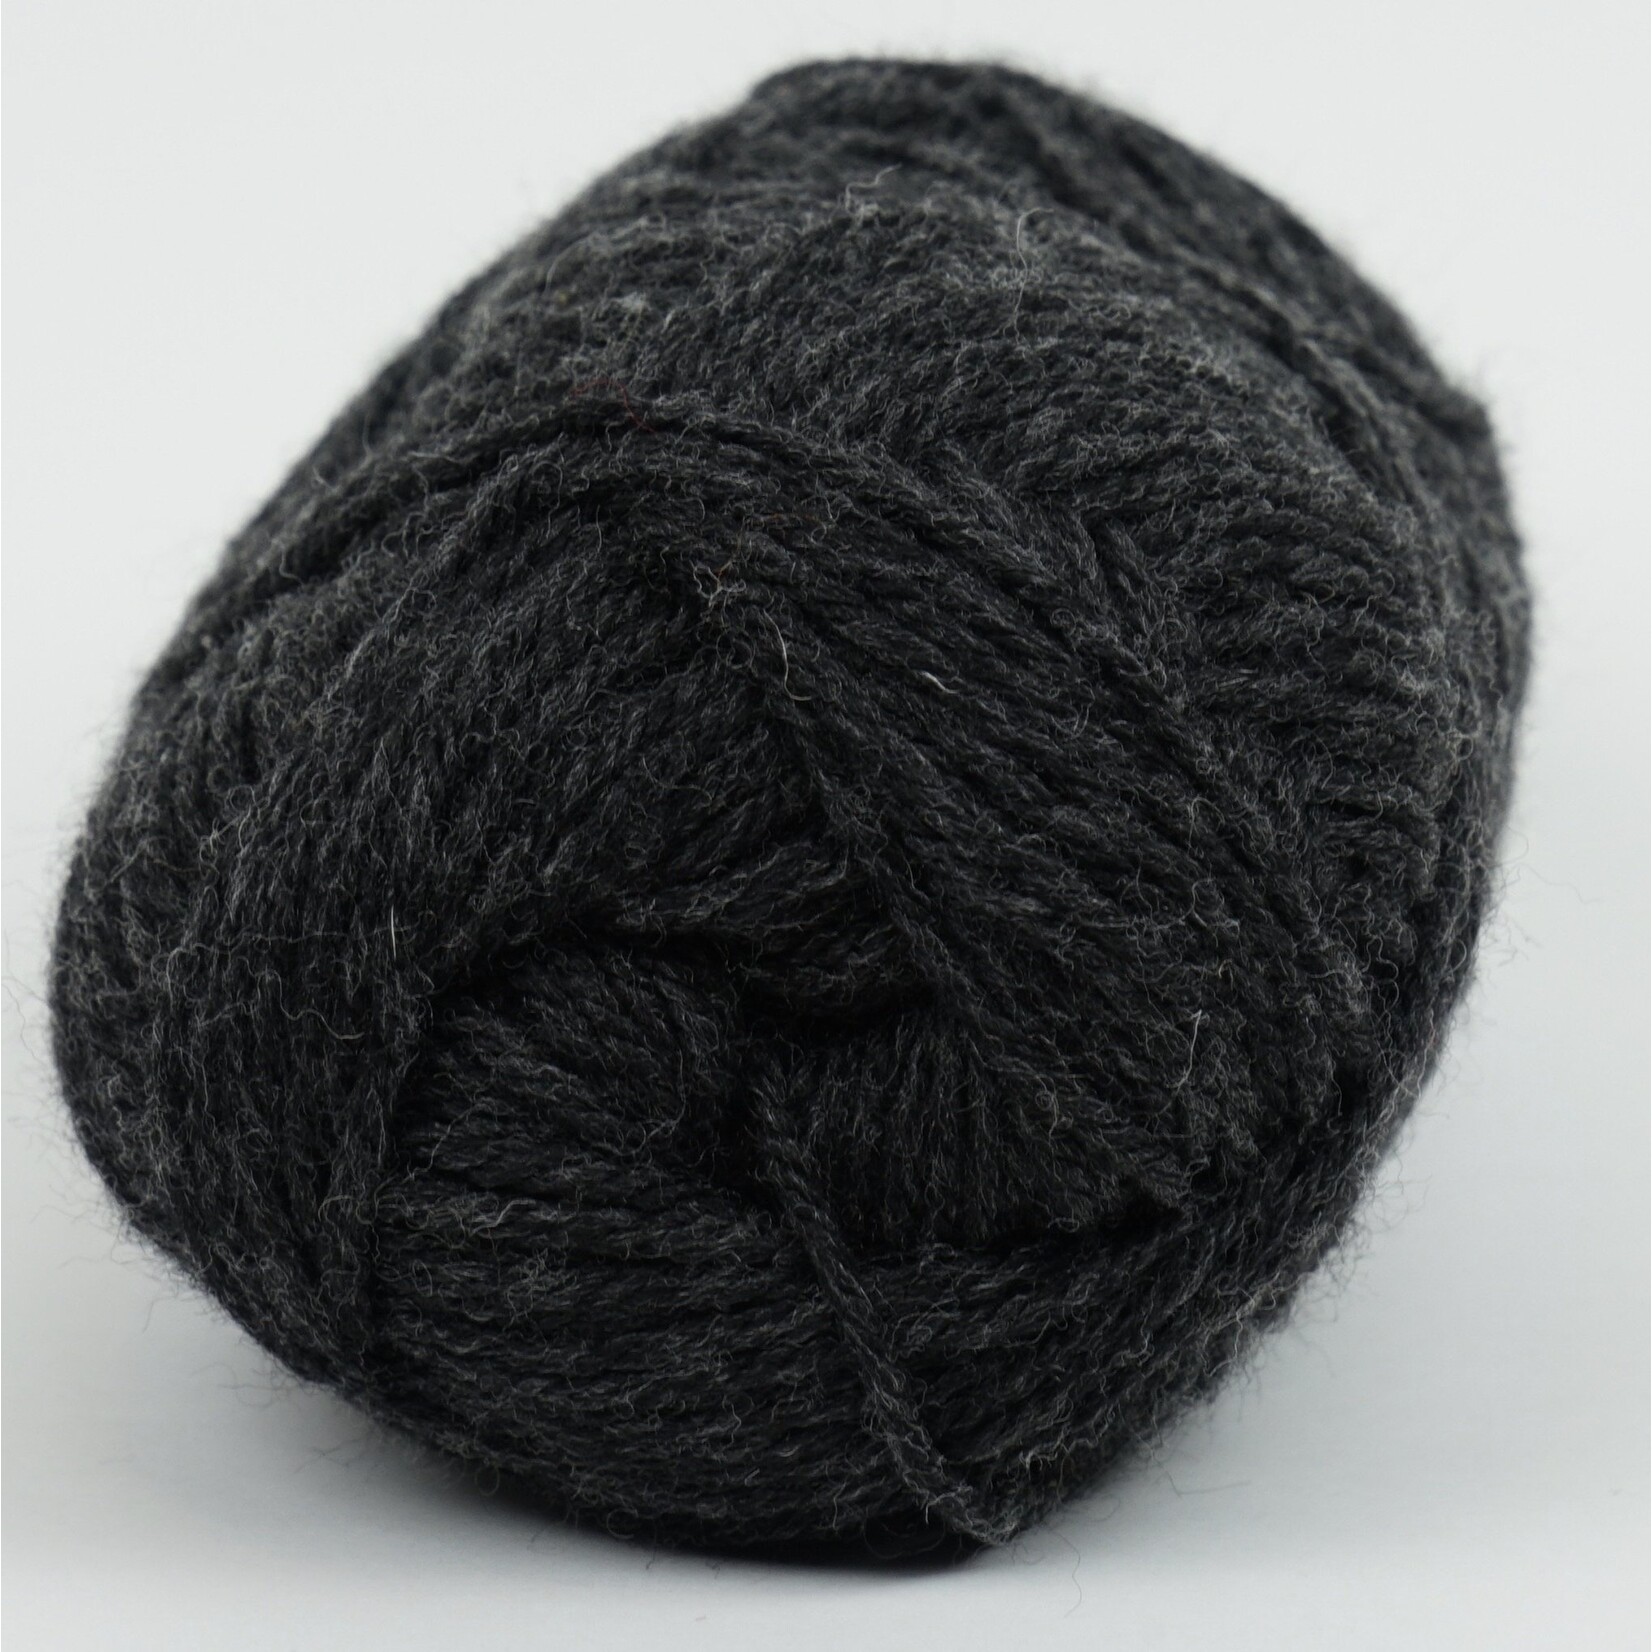 Kraemer Yarns Yarn - Perfection Worsted Charcoal